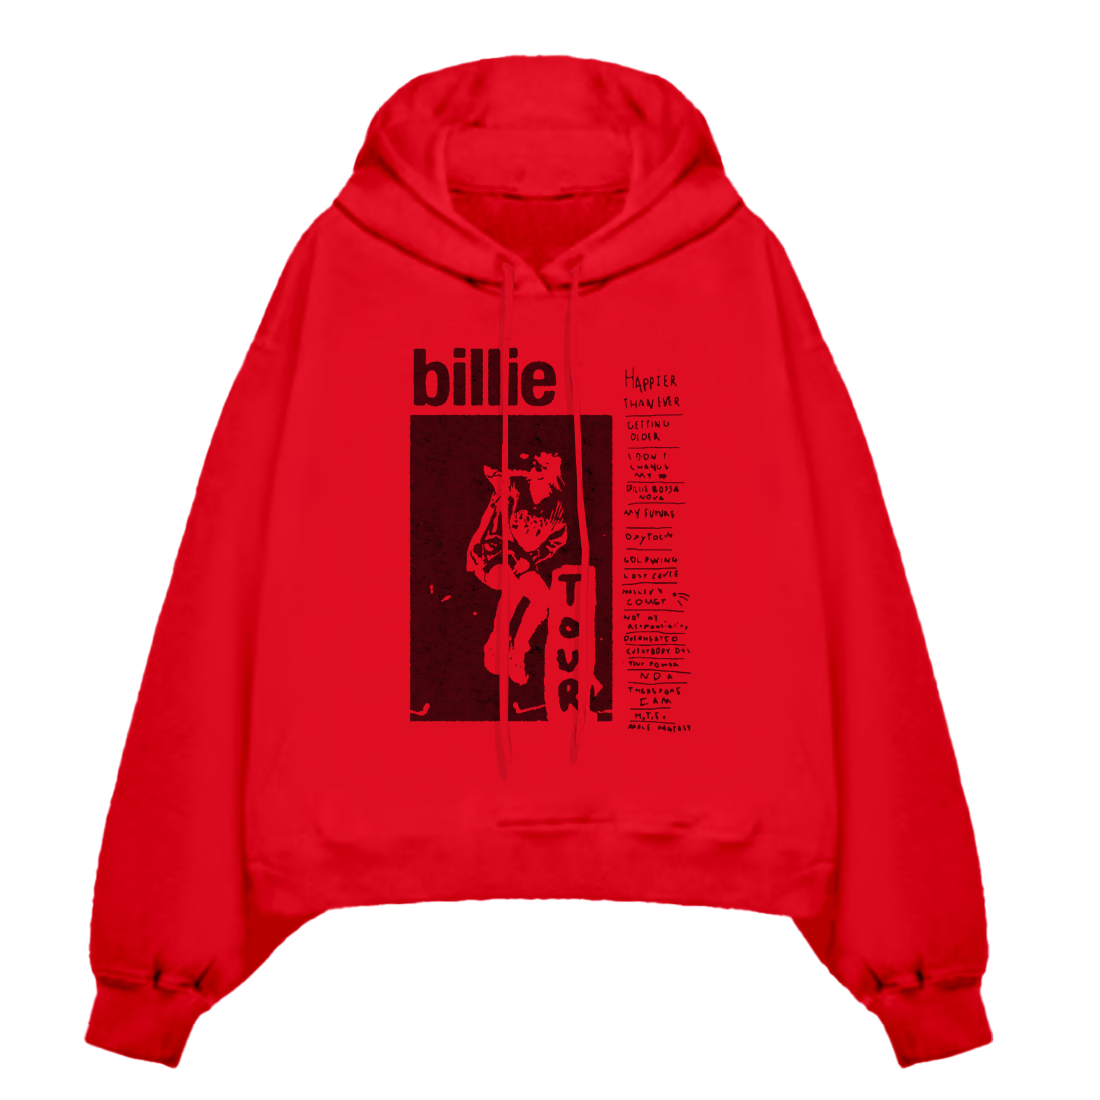 Billie Eilish - Get Involved Red Tour Hoodie